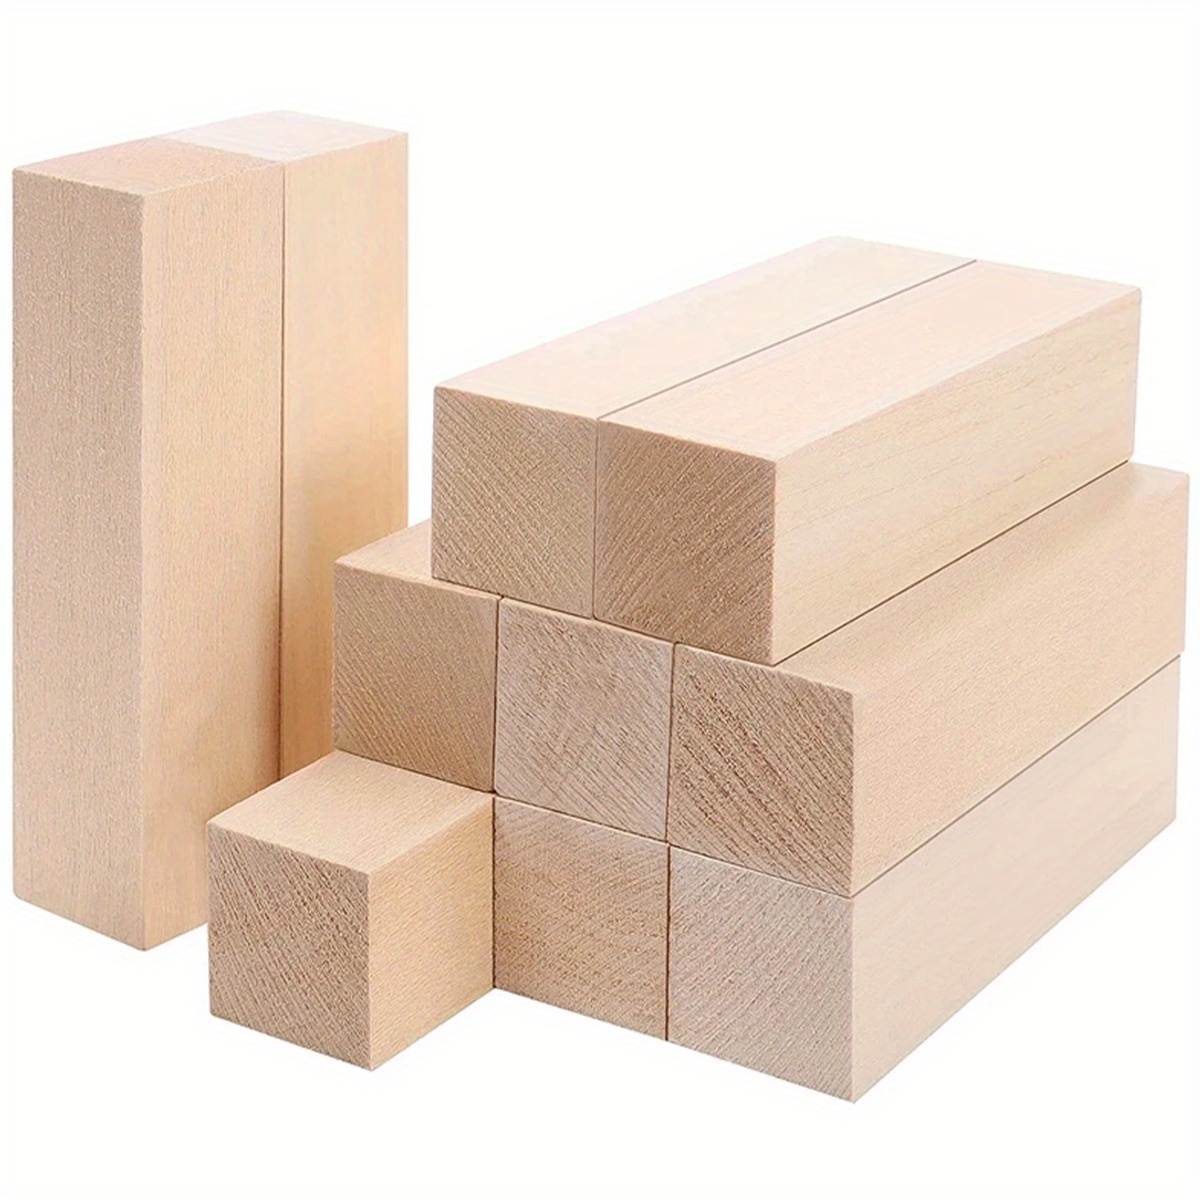 10pcs Basswood Carving Blocks Wood Whittling Blocks For Carving And  Whittling, Beginner To Expert